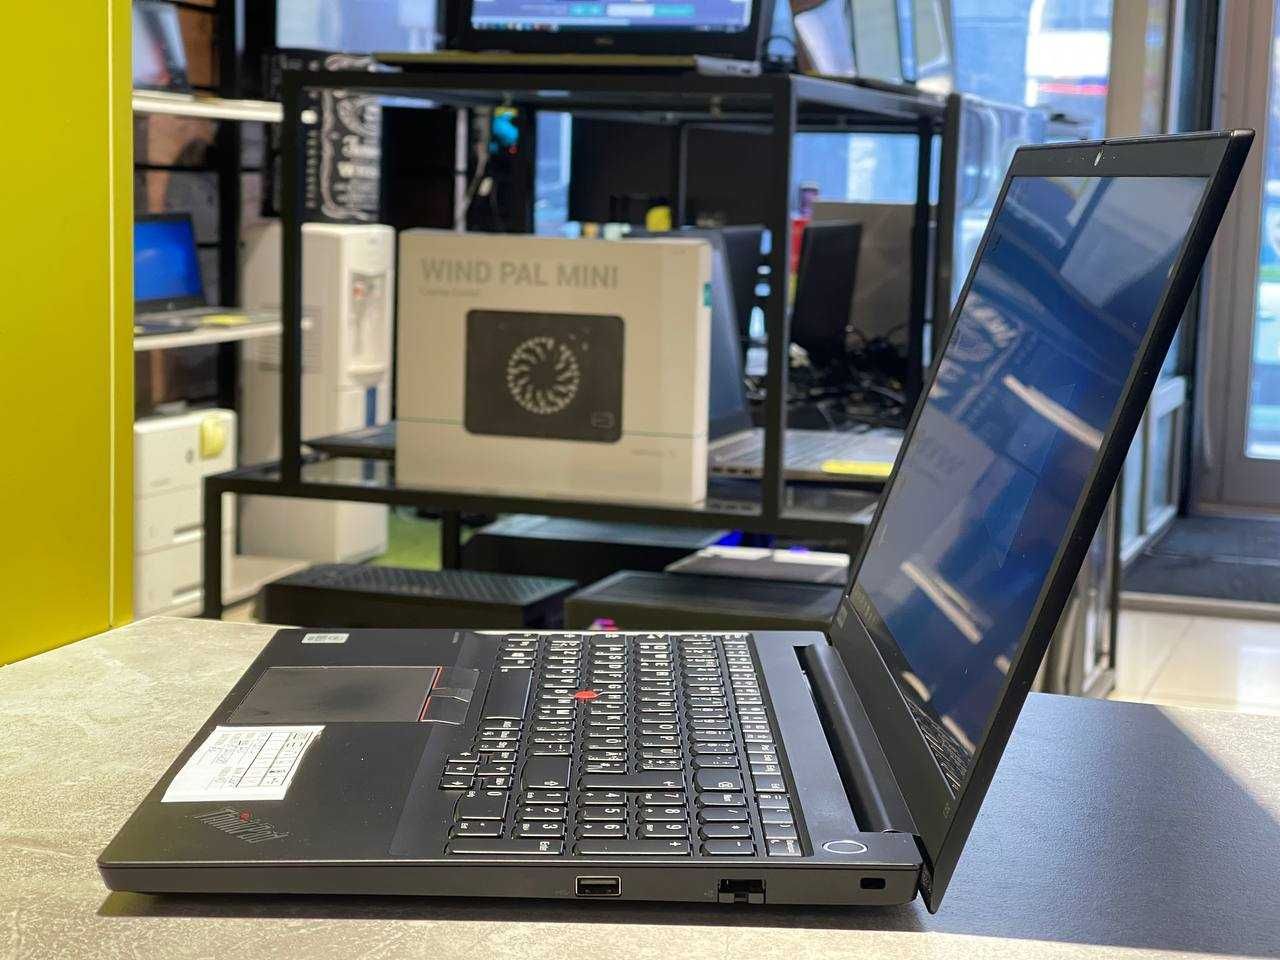 Ноутбук Lenovo ThinkPad E15 ∎IPS∎i5-10210U ∎DDR4-16GB∎SSD-240GB∎вебкам